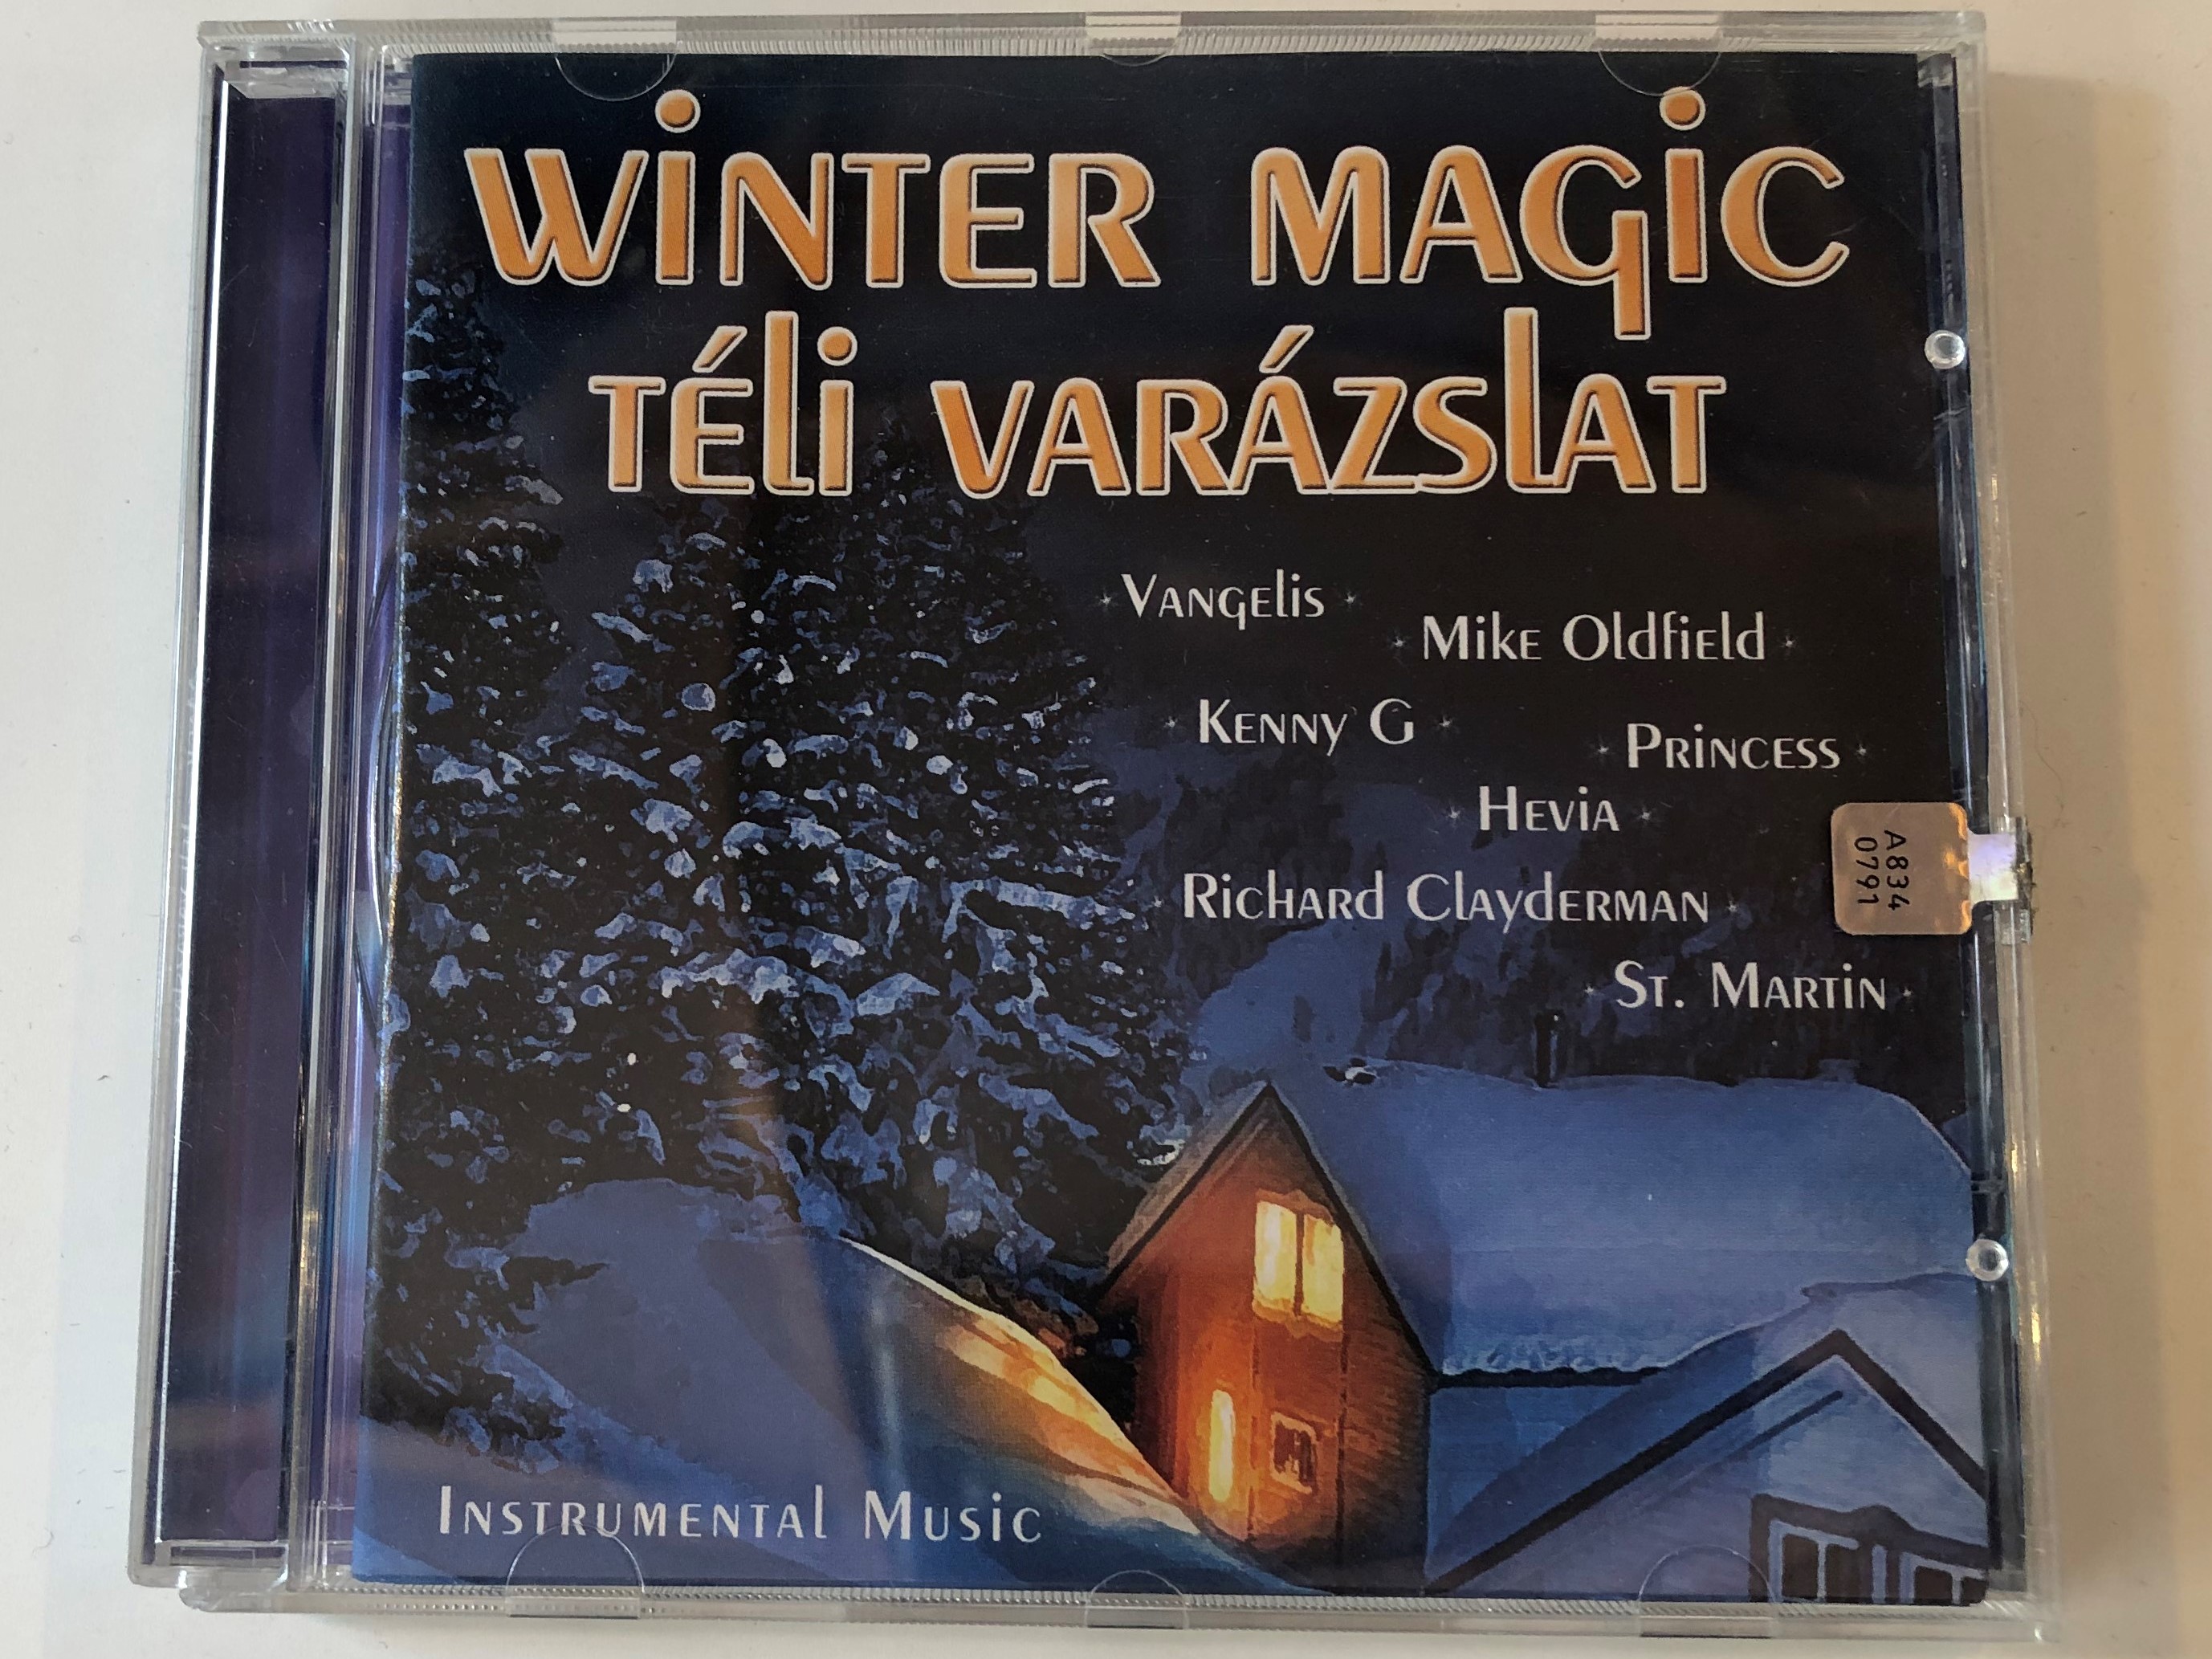 winter-magic-teli-varazslat-vangelis-mike-oldfield-kenny-g-princess-hevia-richard-clayderman-st.-martin-instrumental-music-bmg-hungary-audio-cd-2003-82876585682-1-.jpg